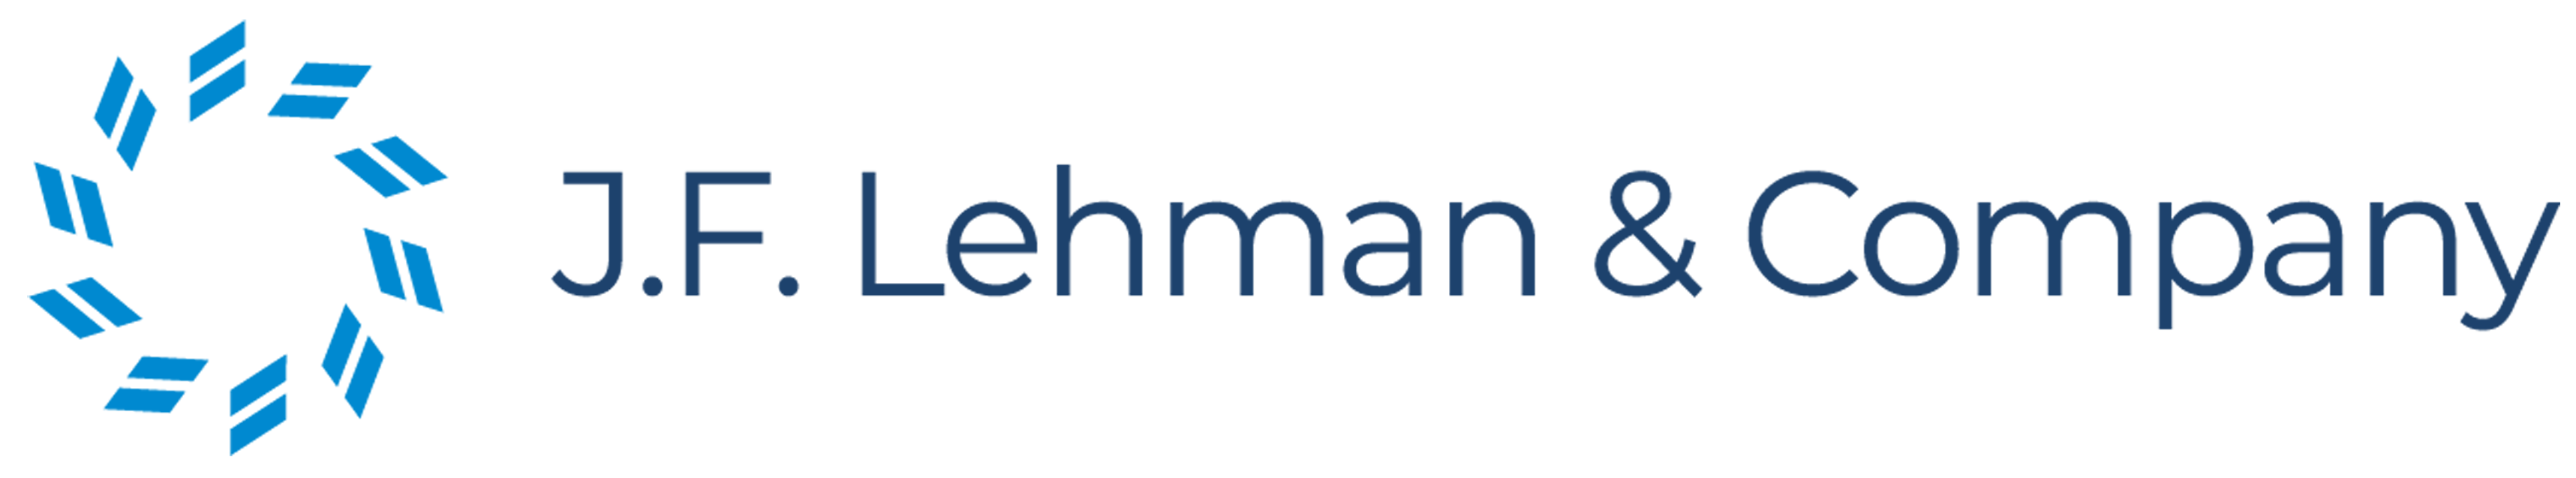 J.F. Lehman & Company Further Augments Professional Team, September 24 2018